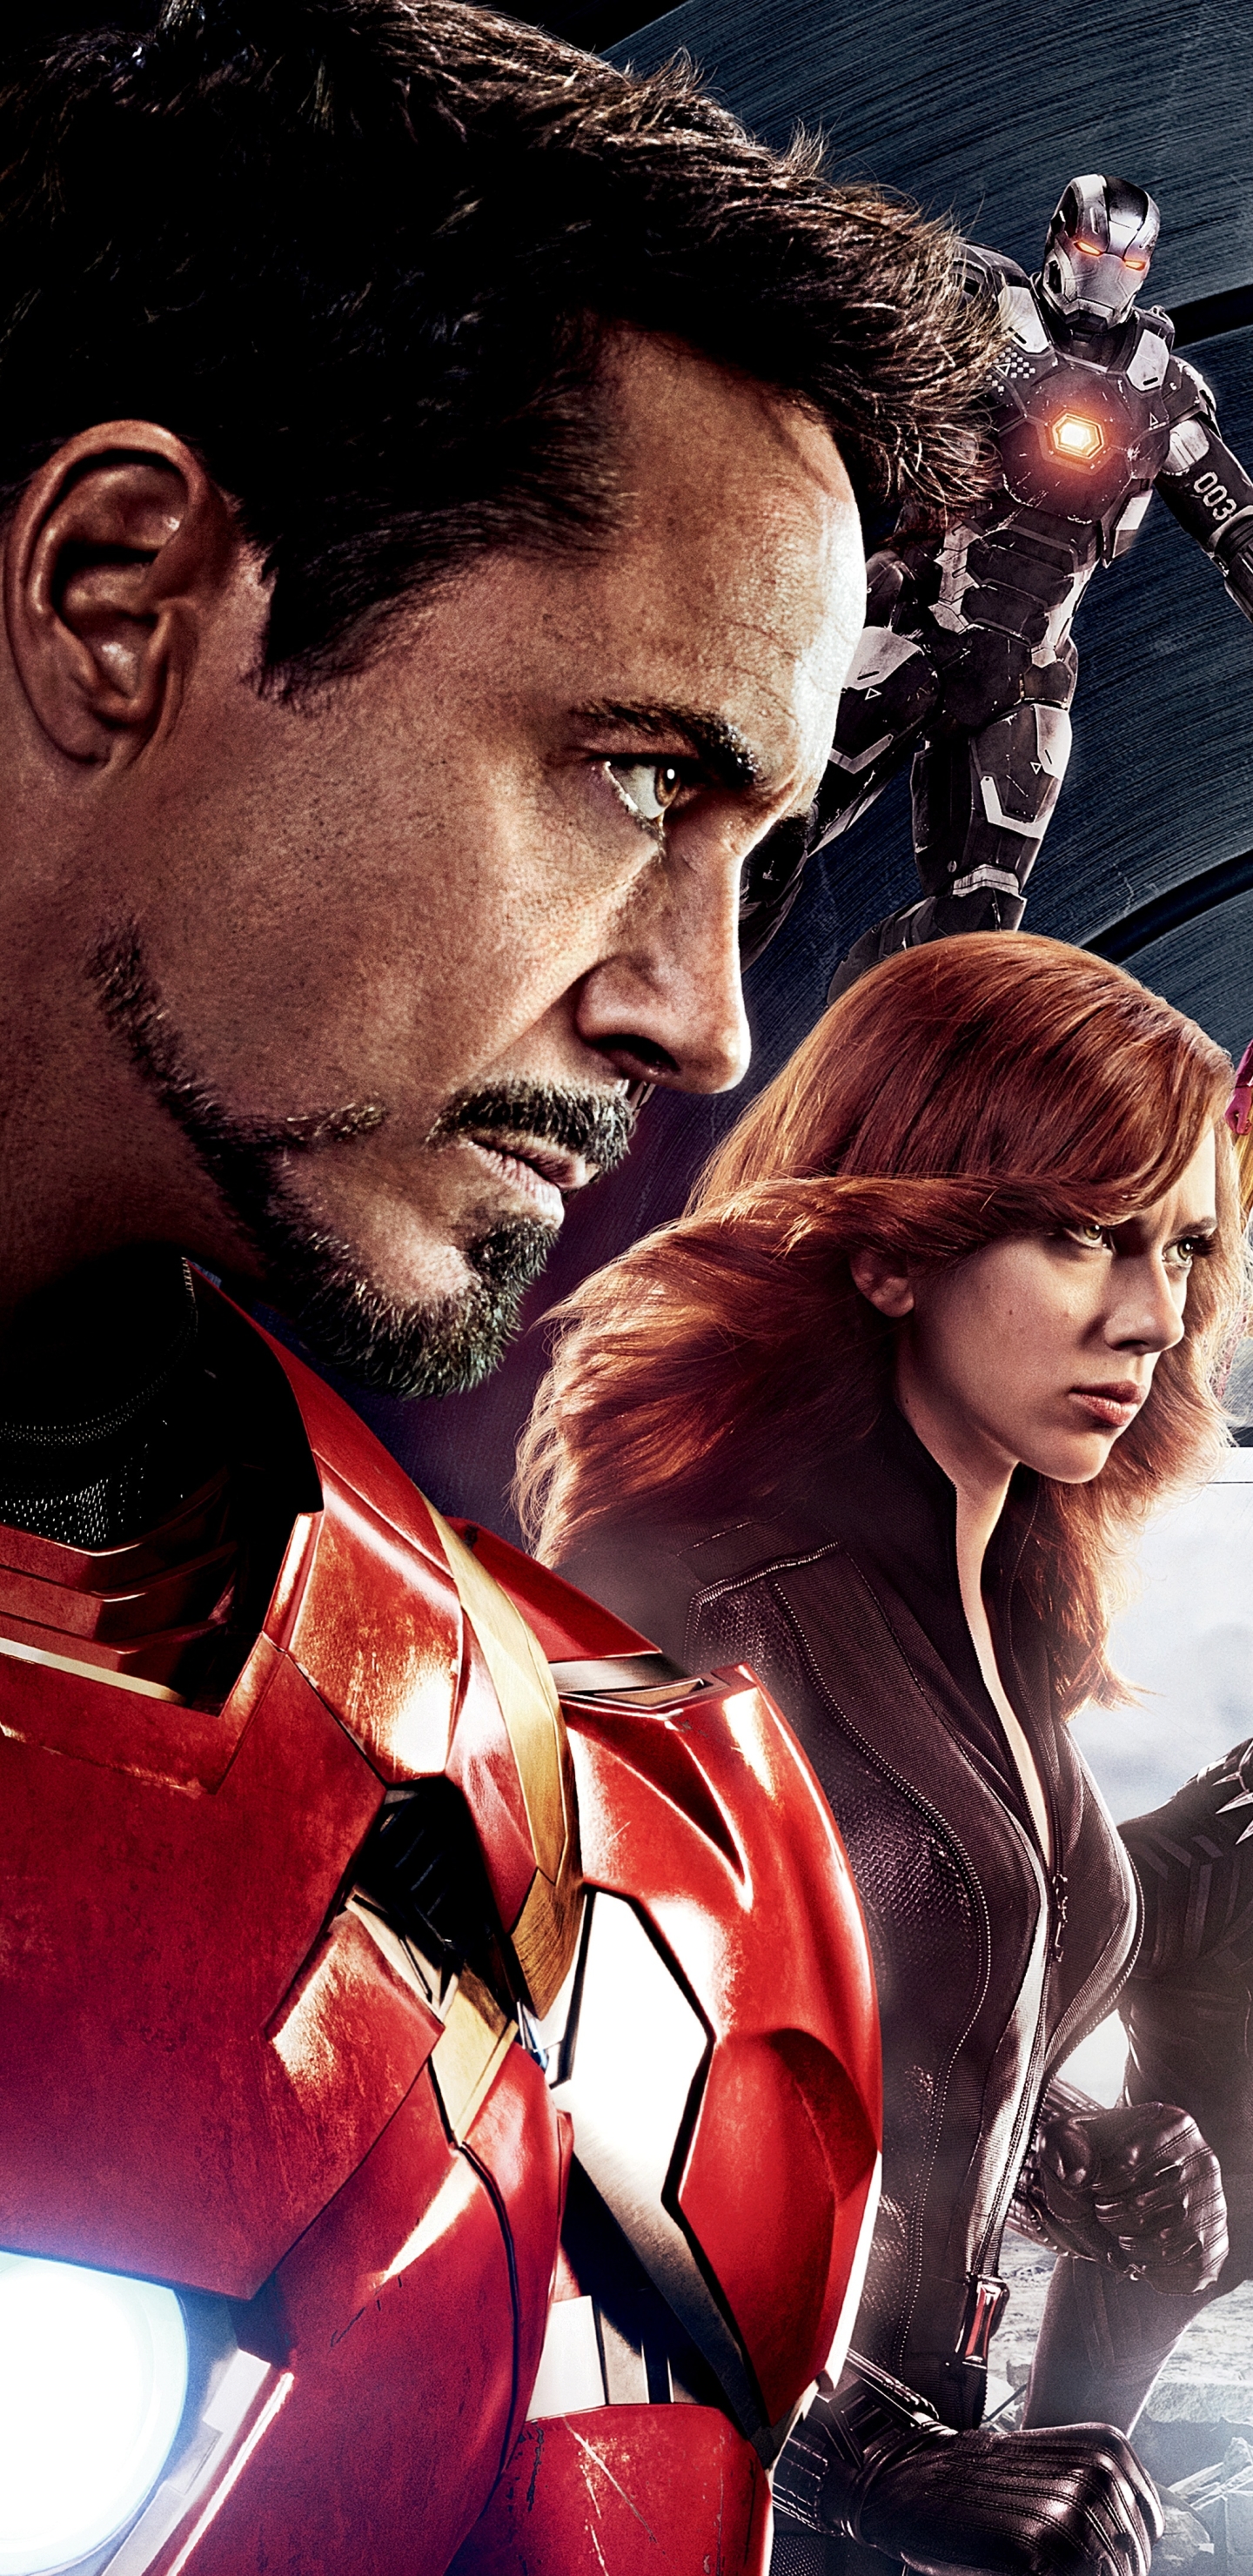 Descarga gratis la imagen Scarlett Johansson, Robert Downey Jr, Películas, Hombre De Acero, Capitan América, Viuda Negra, Maquina De Guerra, Don Cheadle, Capitán América: Civil War en el escritorio de tu PC